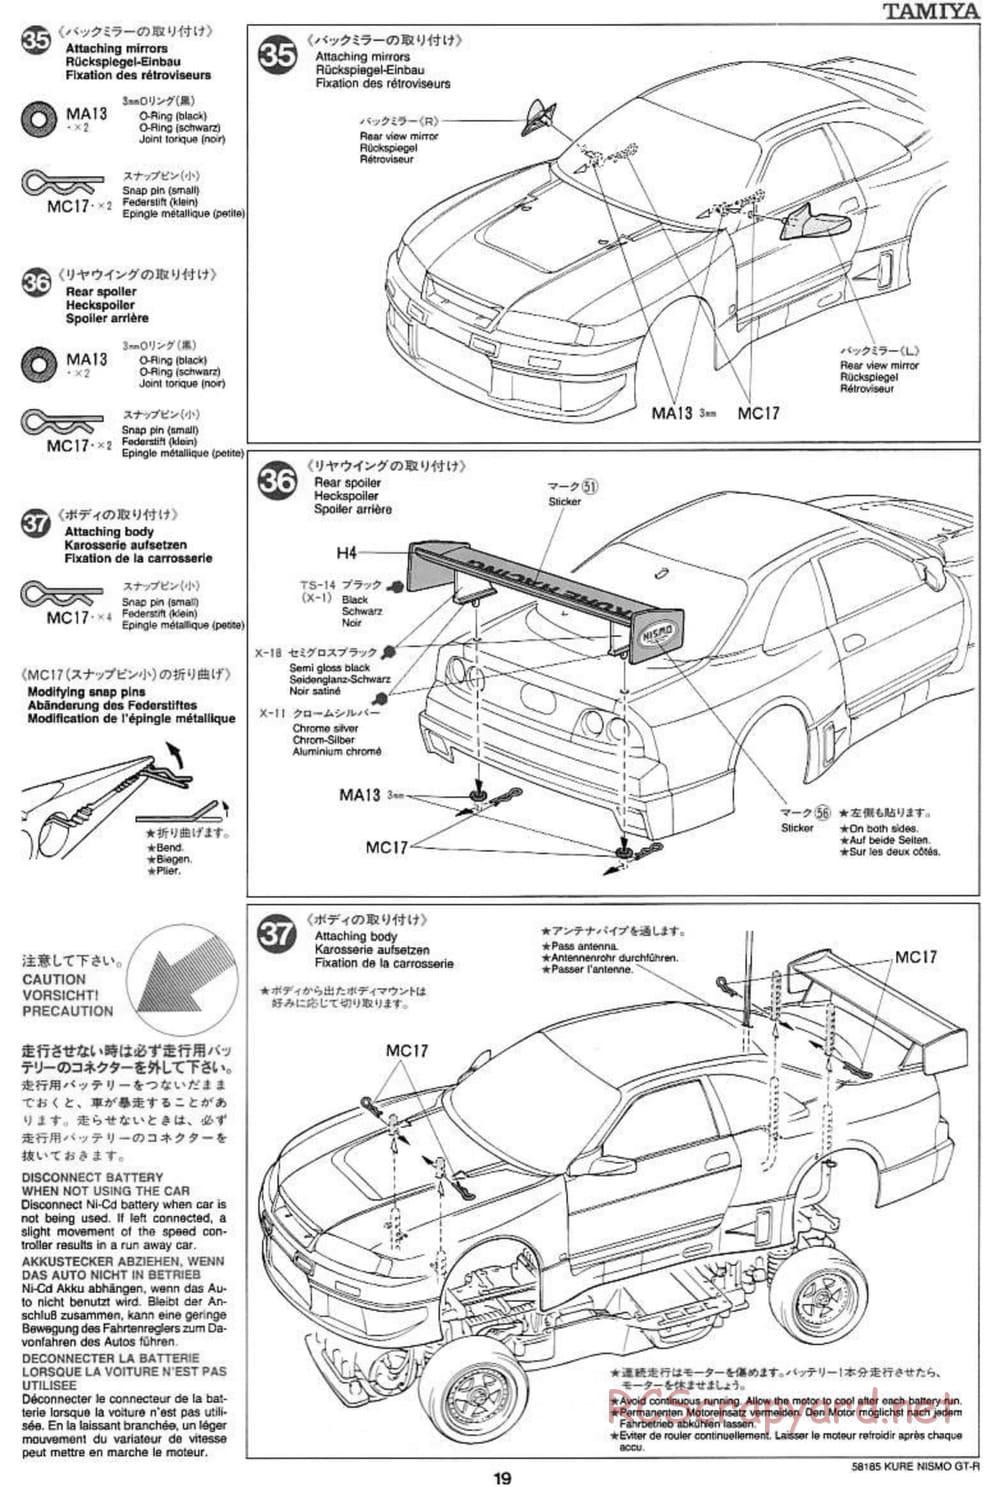 Tamiya - Kure Nismo GT-R - TA-03F Chassis - Manual - Page 19